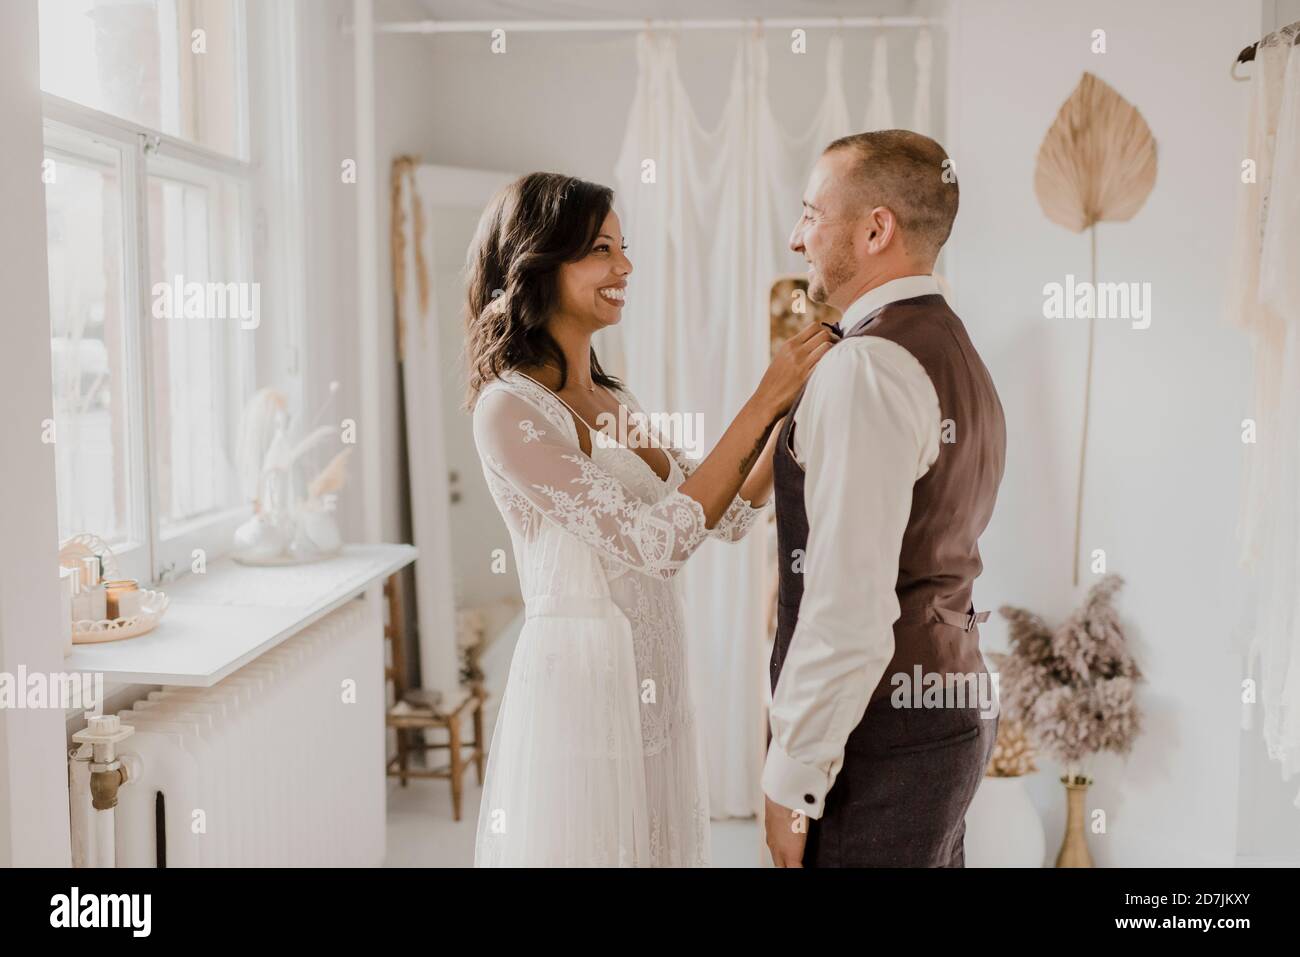 Smiling bride tying bow to bridegroom at wedding dress shop Stock Photo